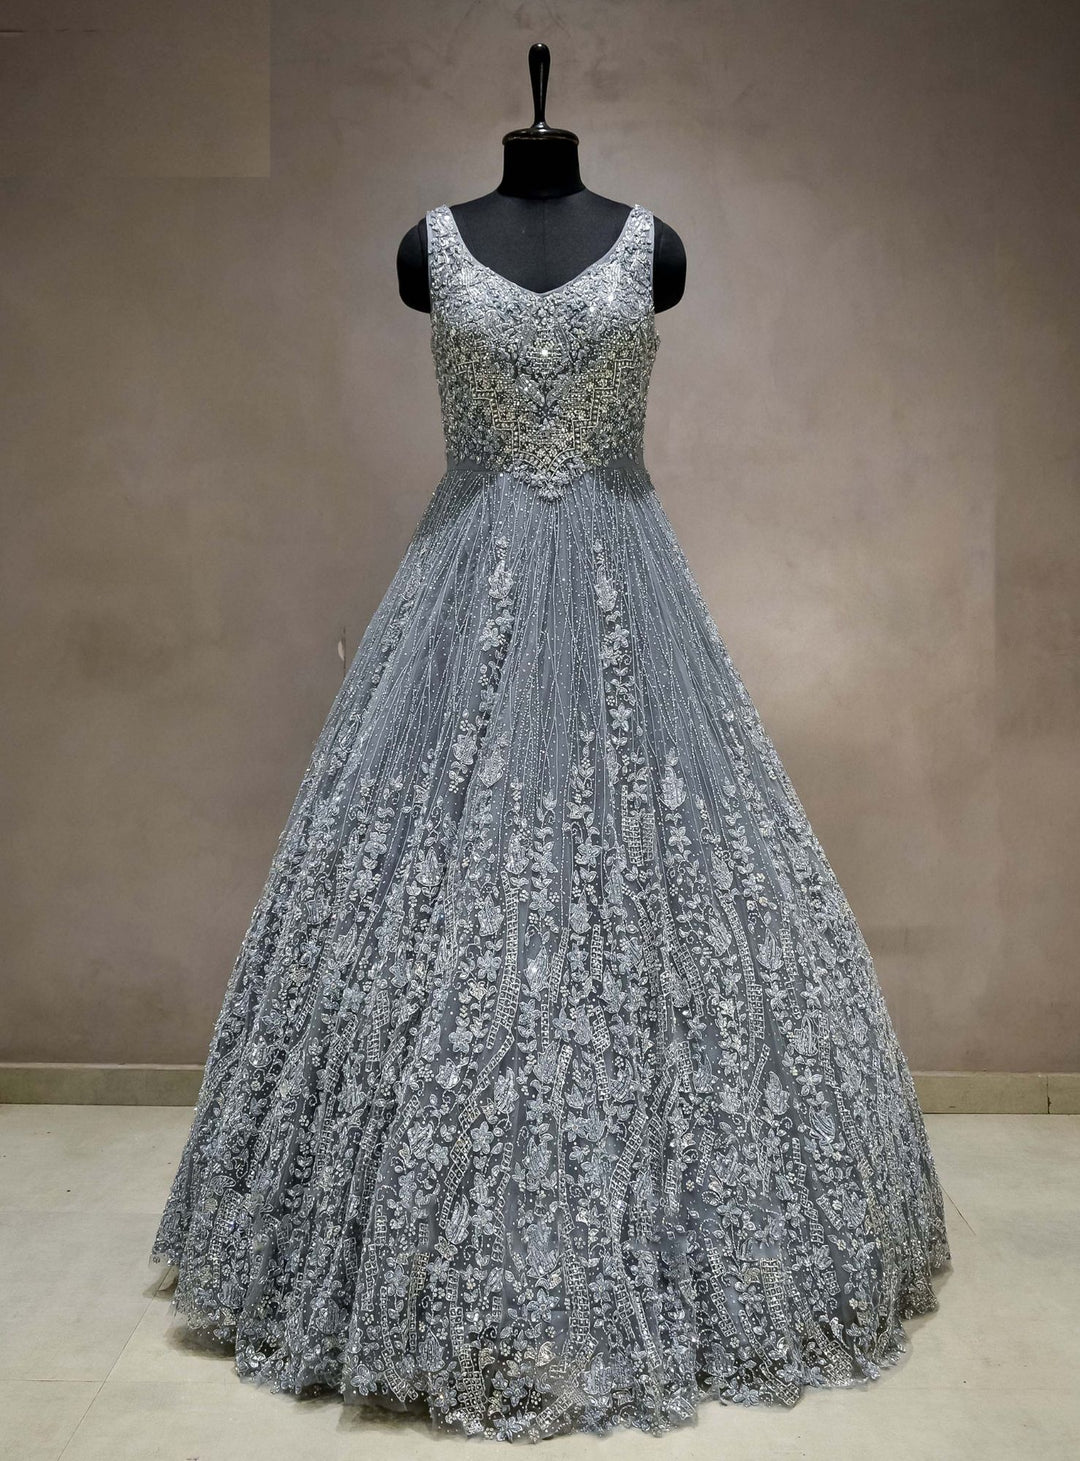 Meraj couture's sleeveless Dark Grey Gown - RENT